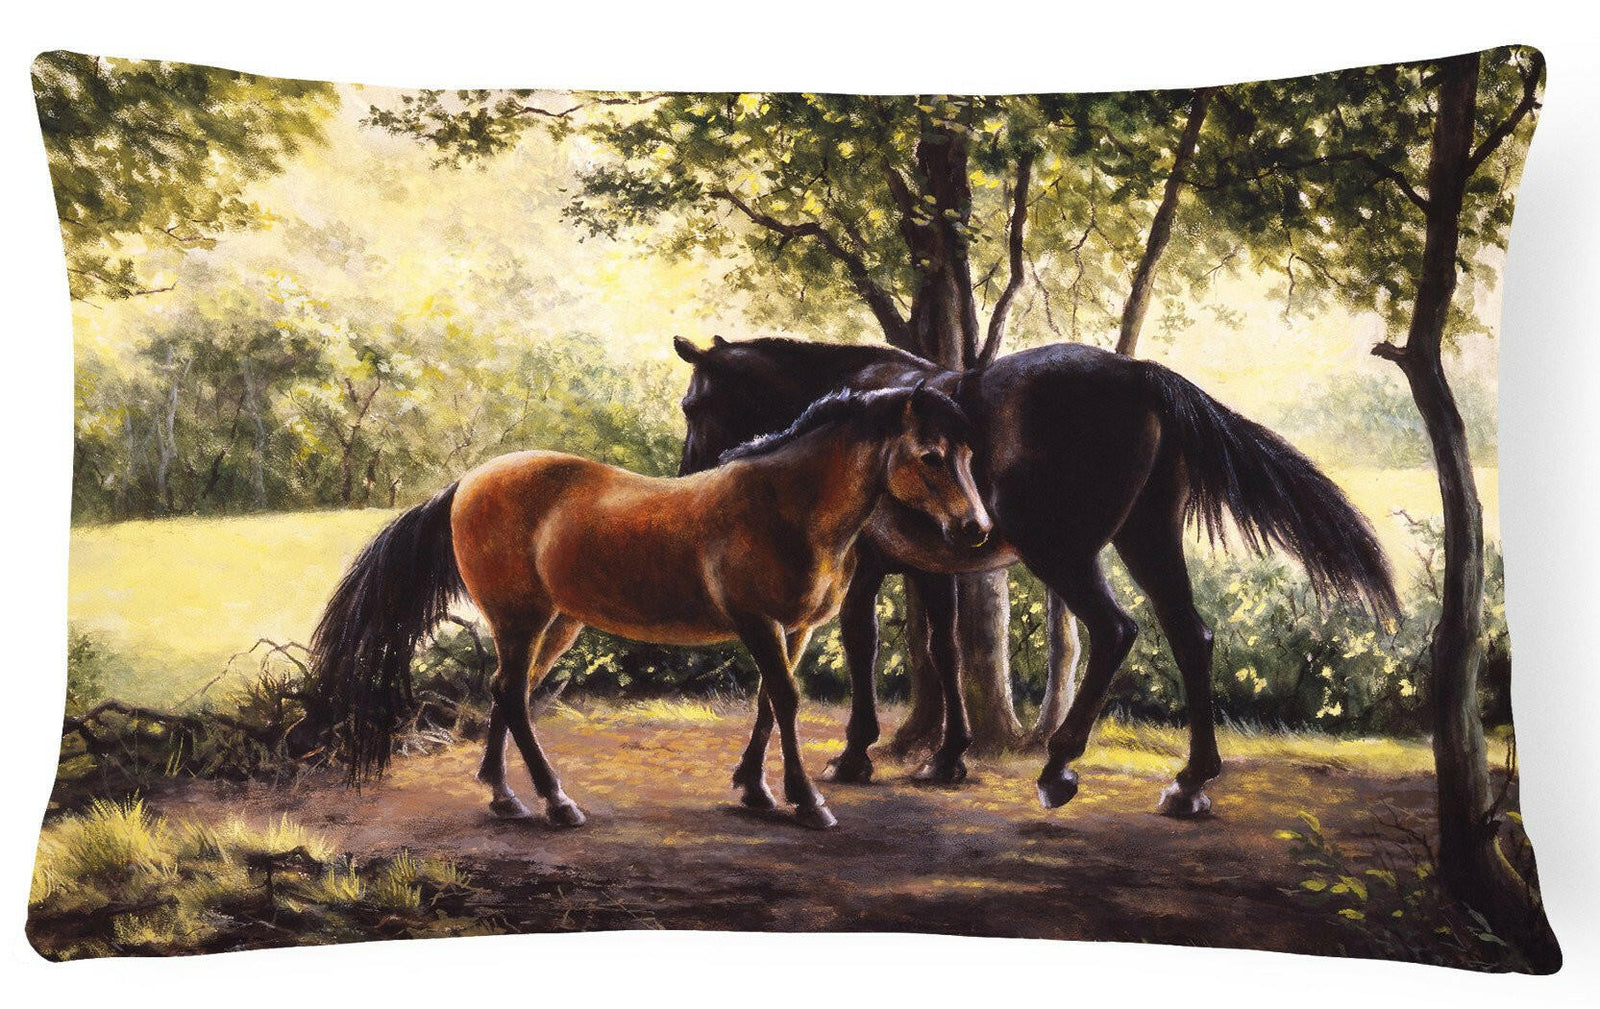 Horses by Daphne Baxter Fabric Decorative Pillow BDBA0055PW1216 by Caroline's Treasures